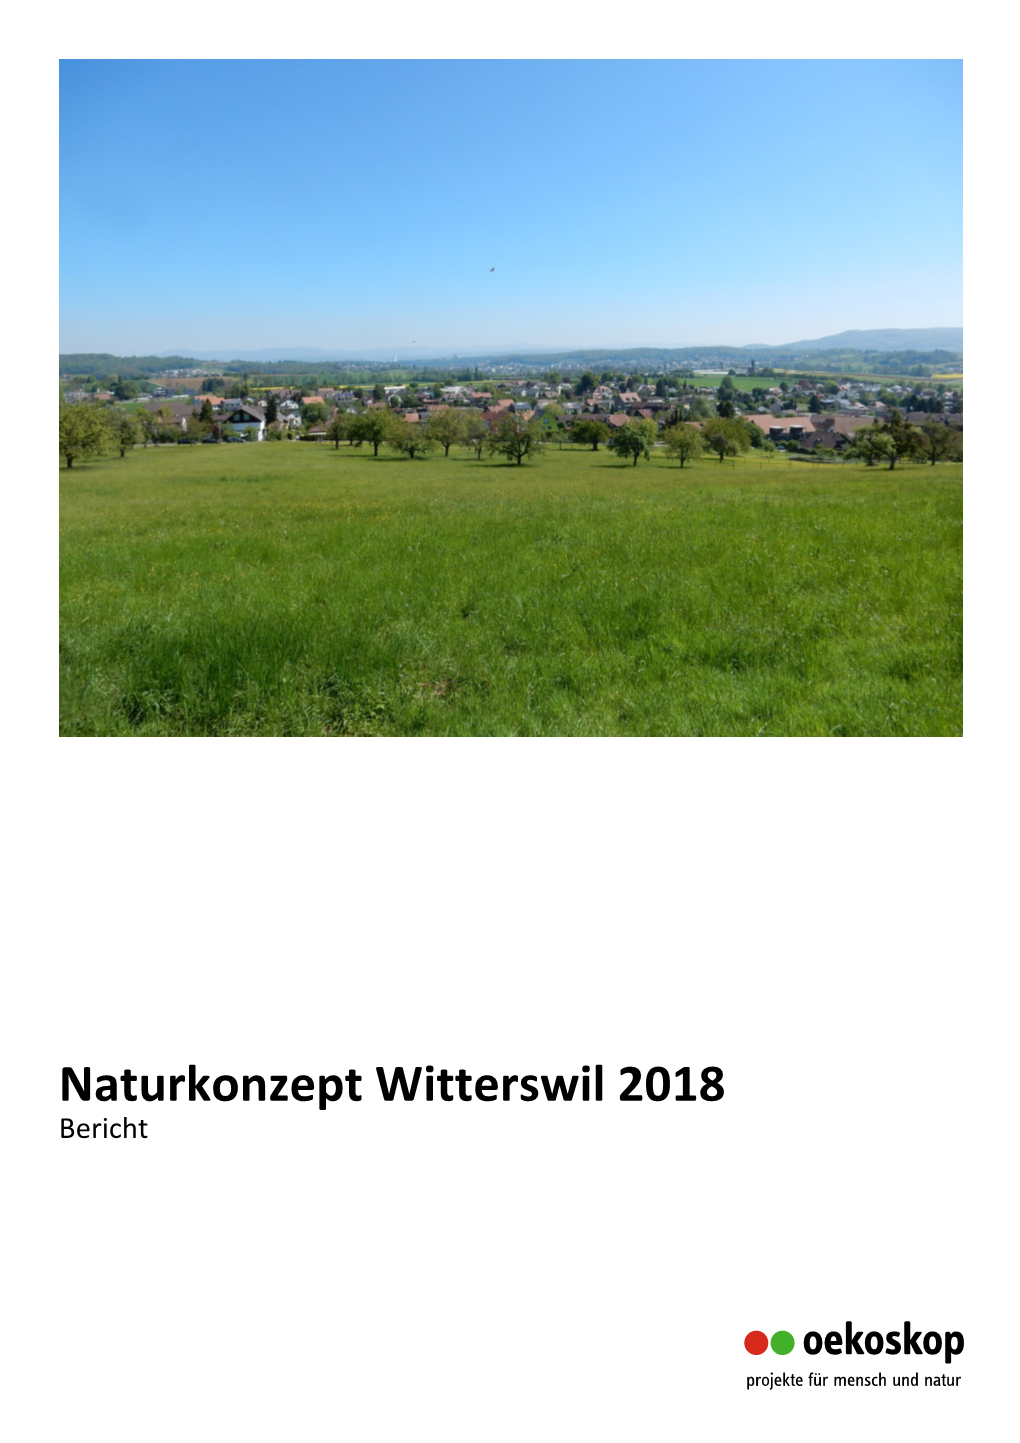 A Bericht Naturkonzept Witterswil 03-7-19